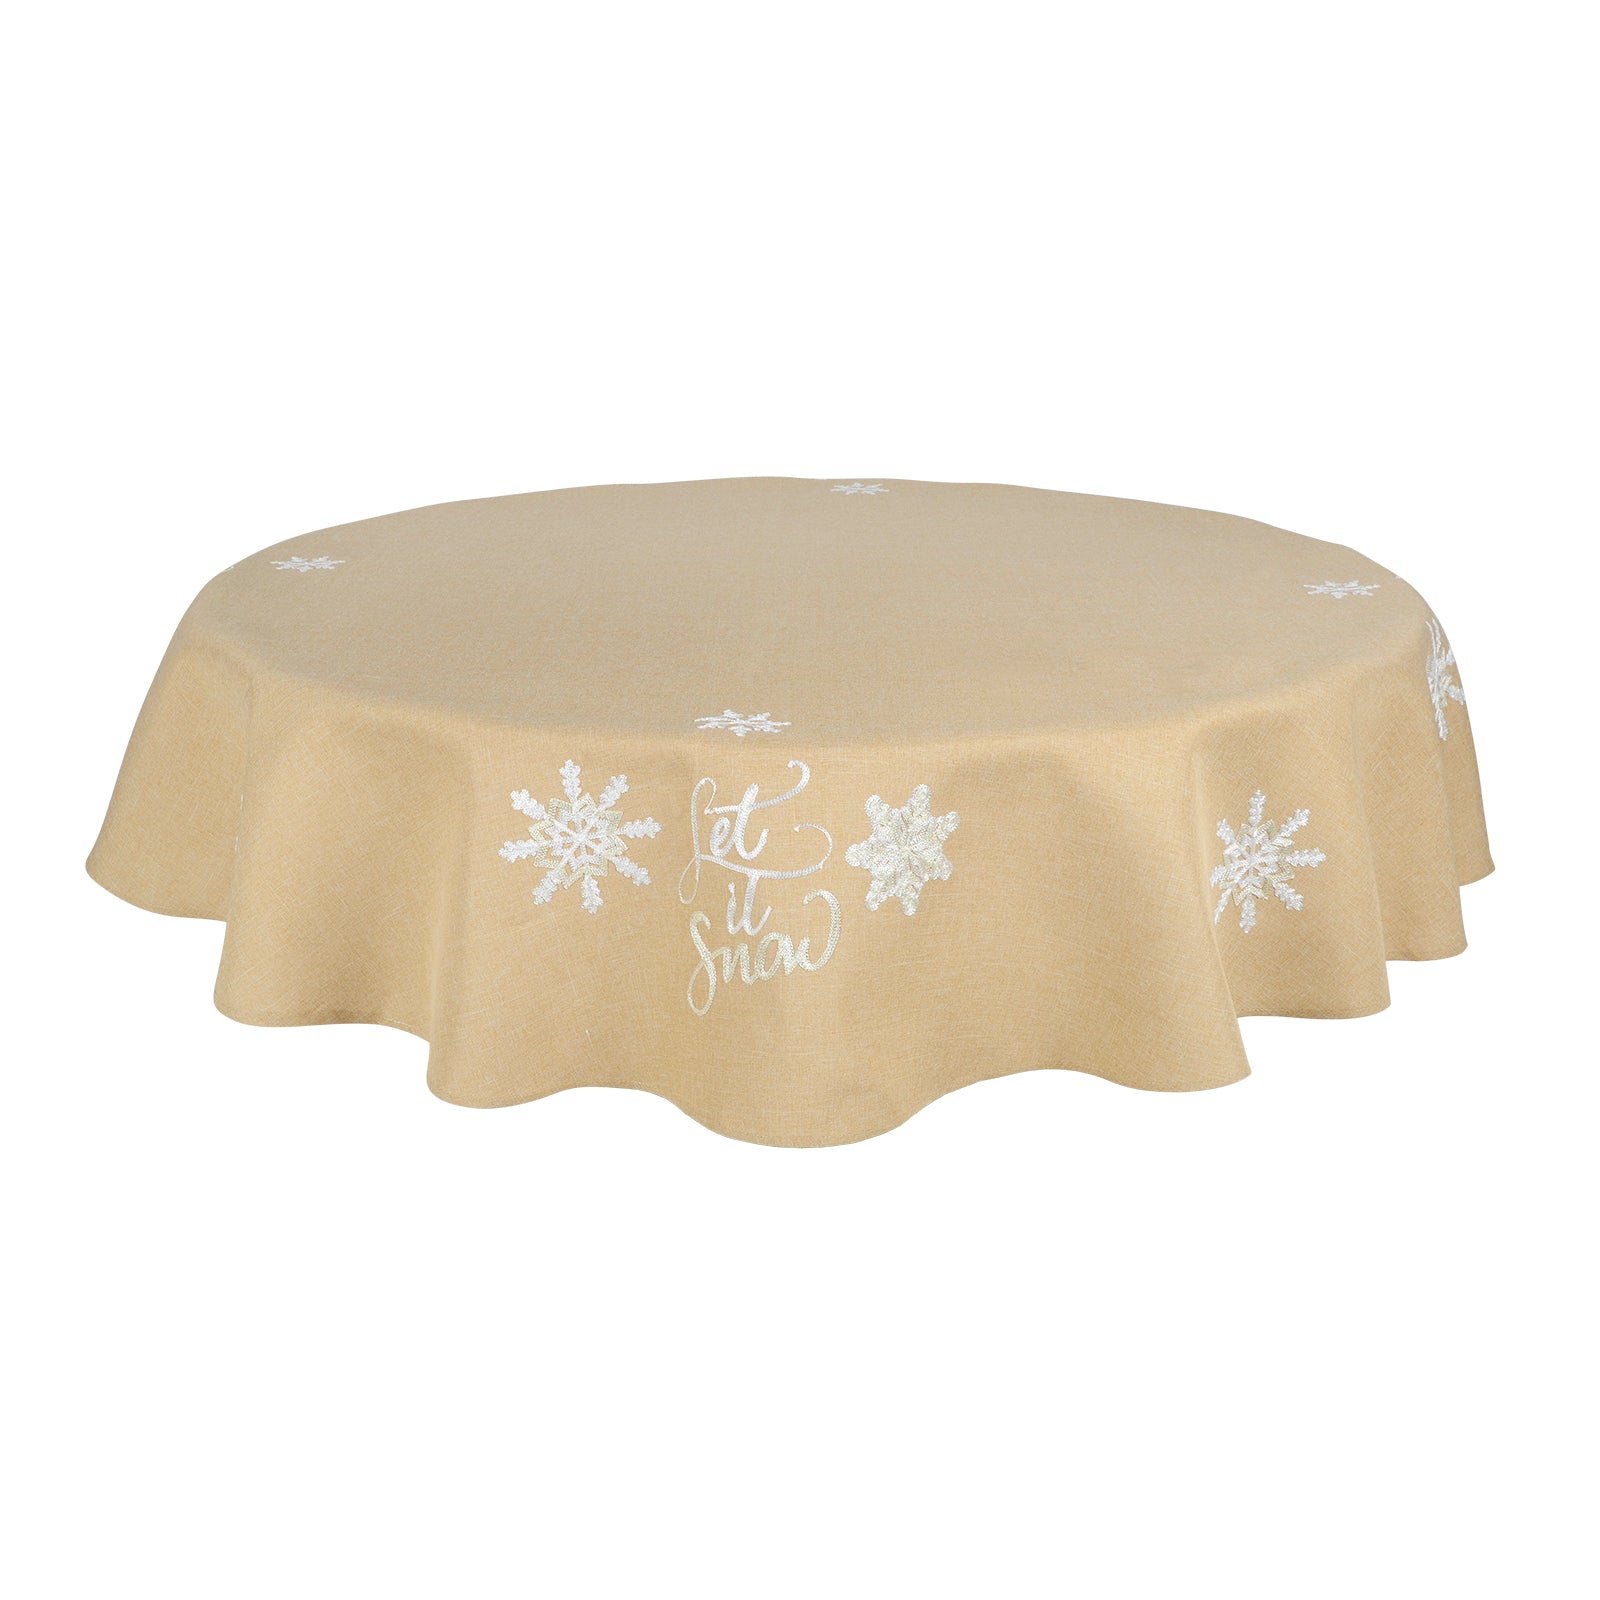 Mr Crimbo Let it Snow Embroidered Tablecloth/Napkin - MrCrimbo.co.uk -XS5869 - Biscuit -christmas napkins